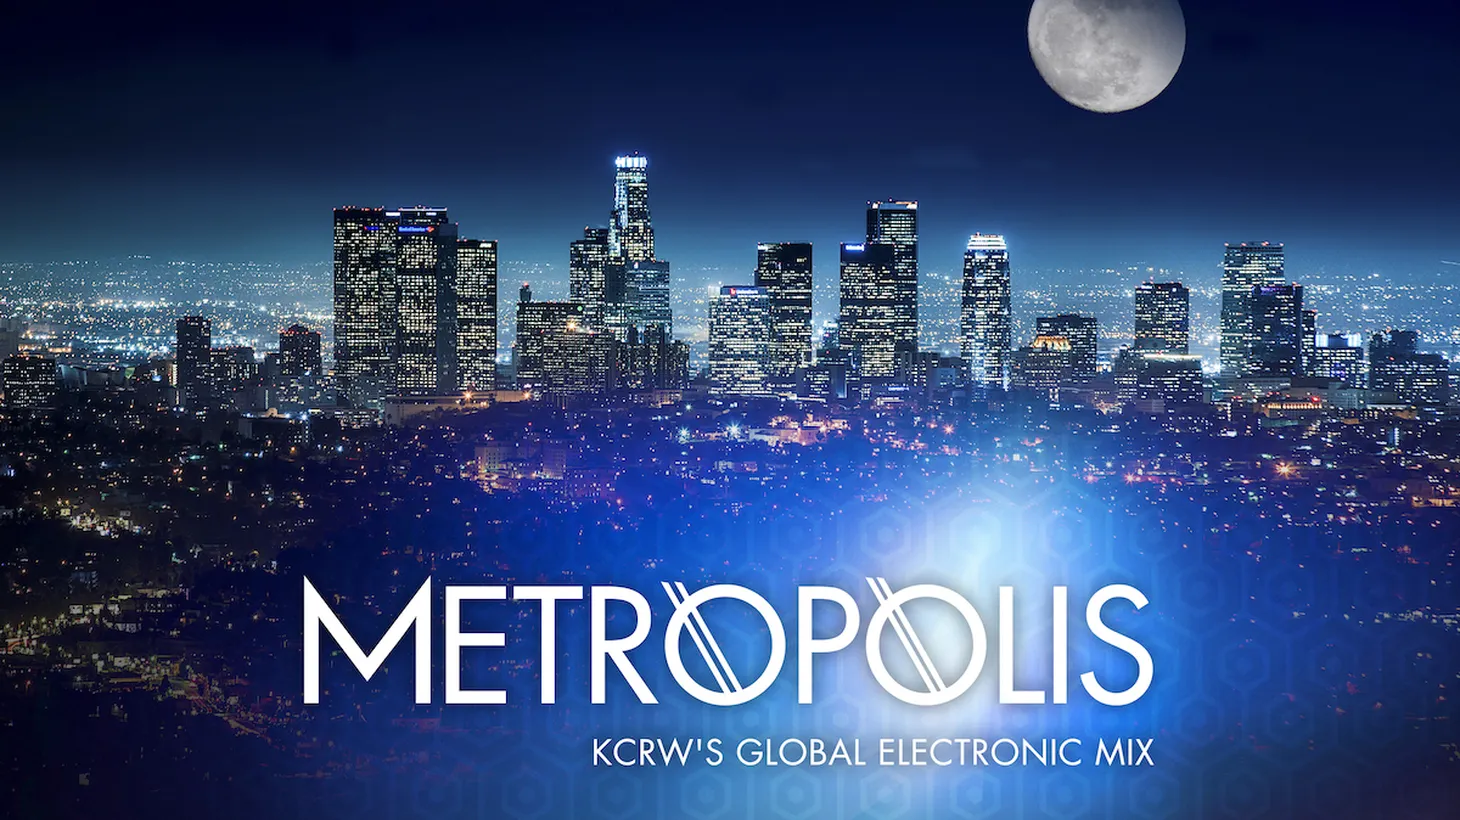 Metropolis playlist, July 24, 2021.